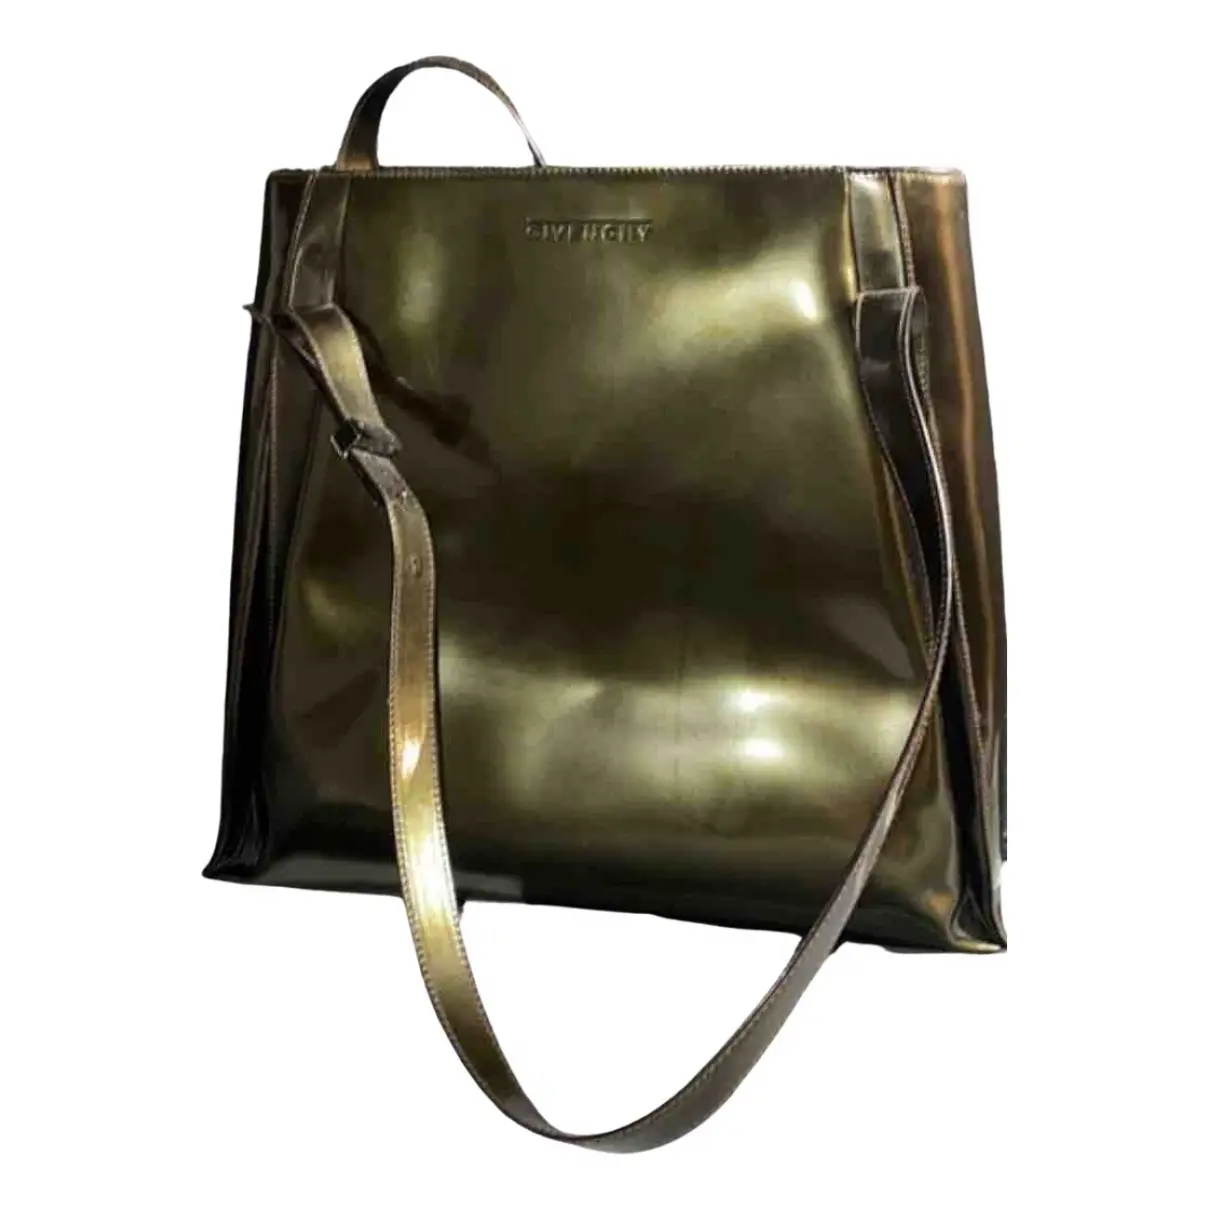 Patent leather handbag Givenchy